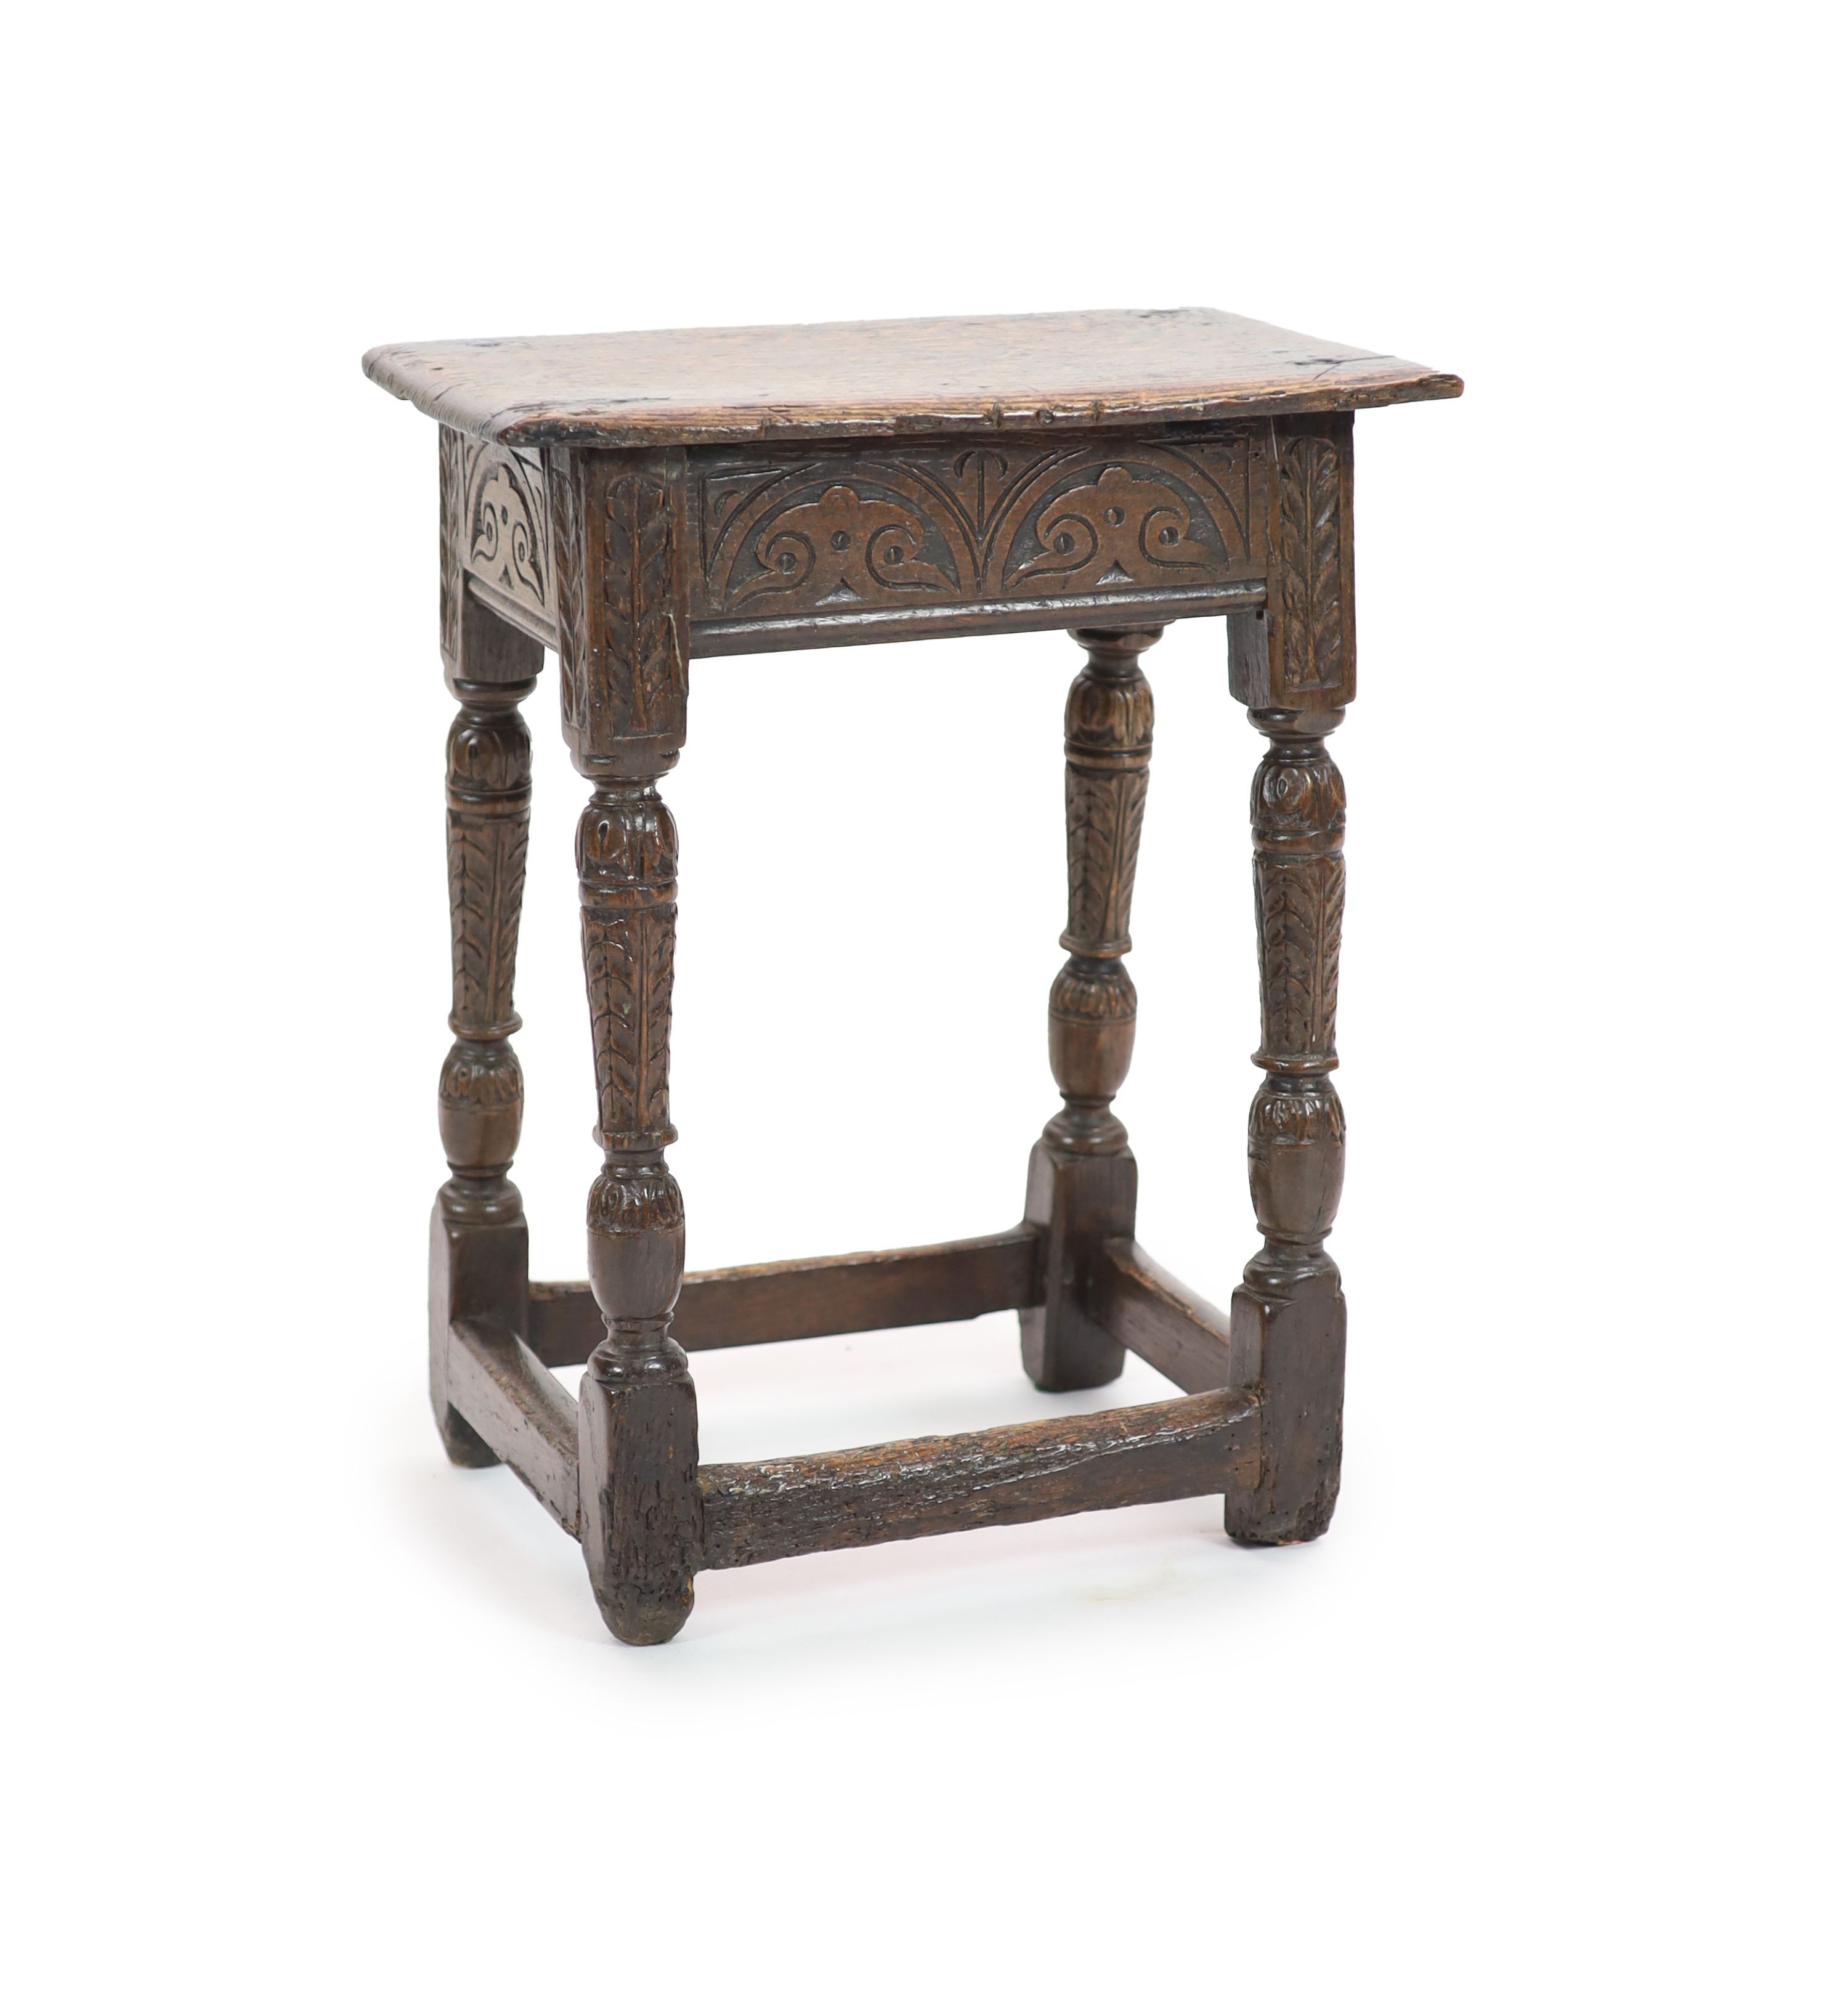 A Charles I oak joint stool, H 56cm. W 44cm. D 26cm.